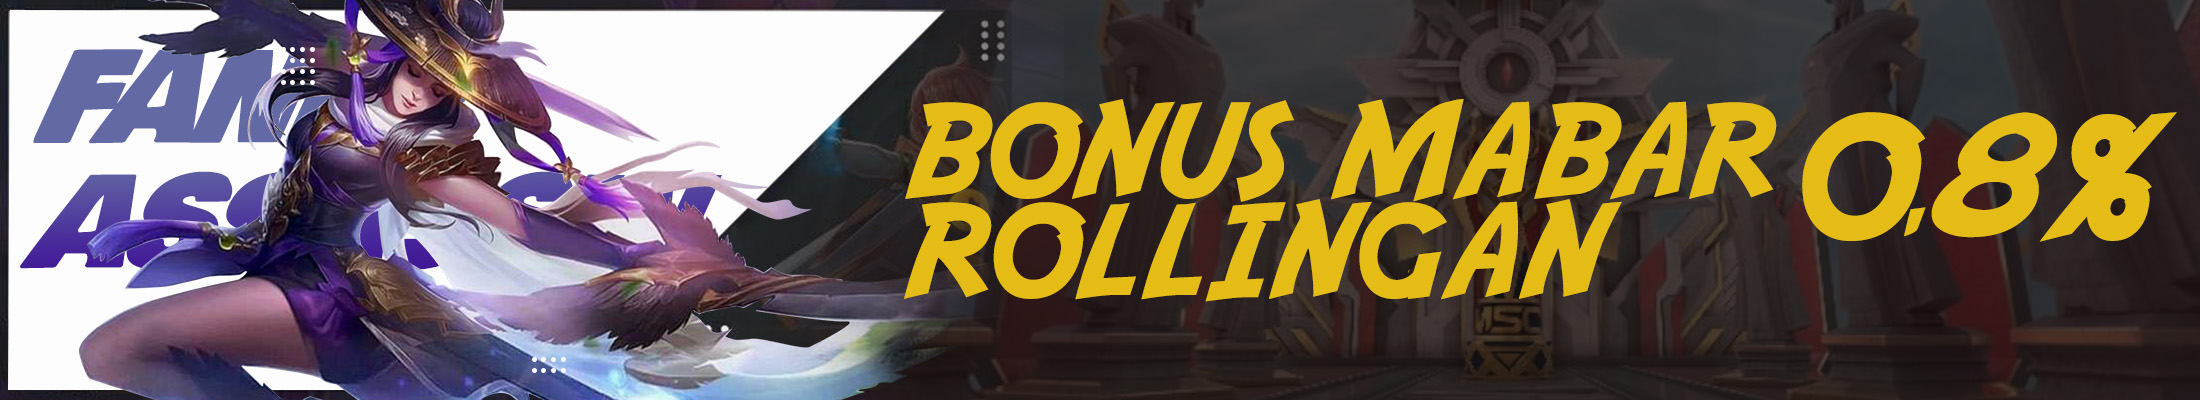 Bonus rollingan